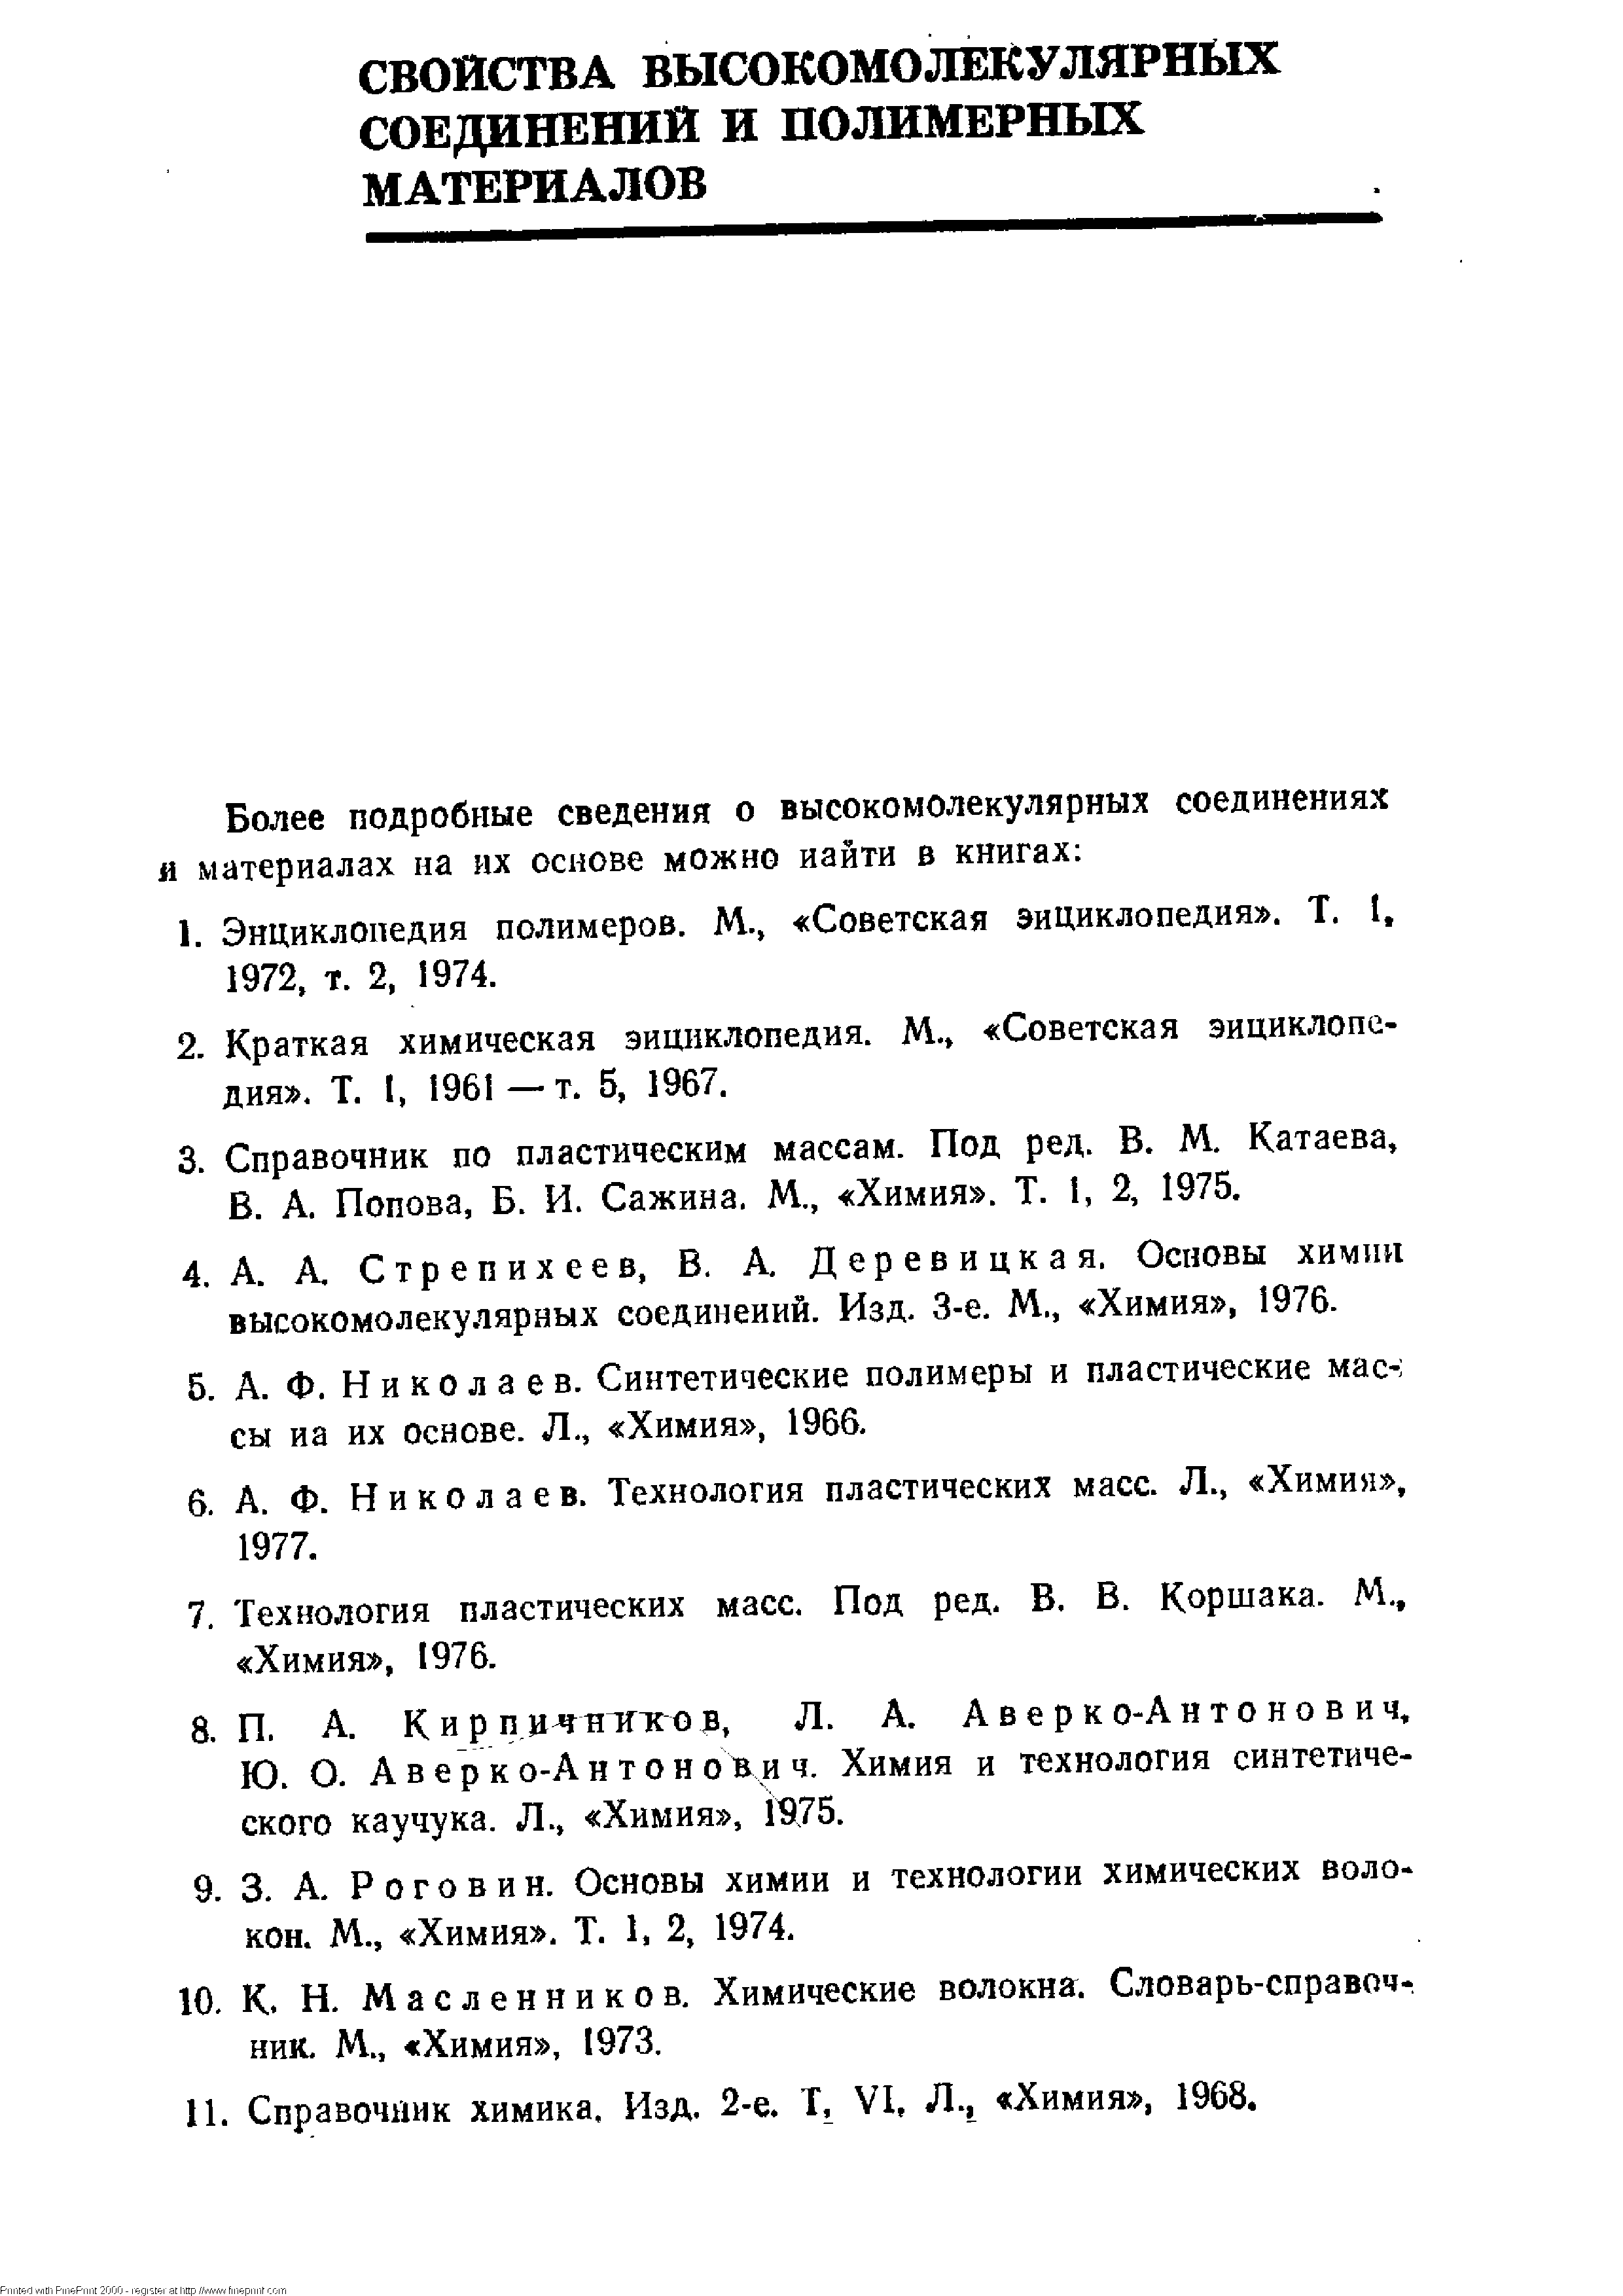 Справочник химика. Изд. 2-е. Т, VI, Л., Химия , 1968.